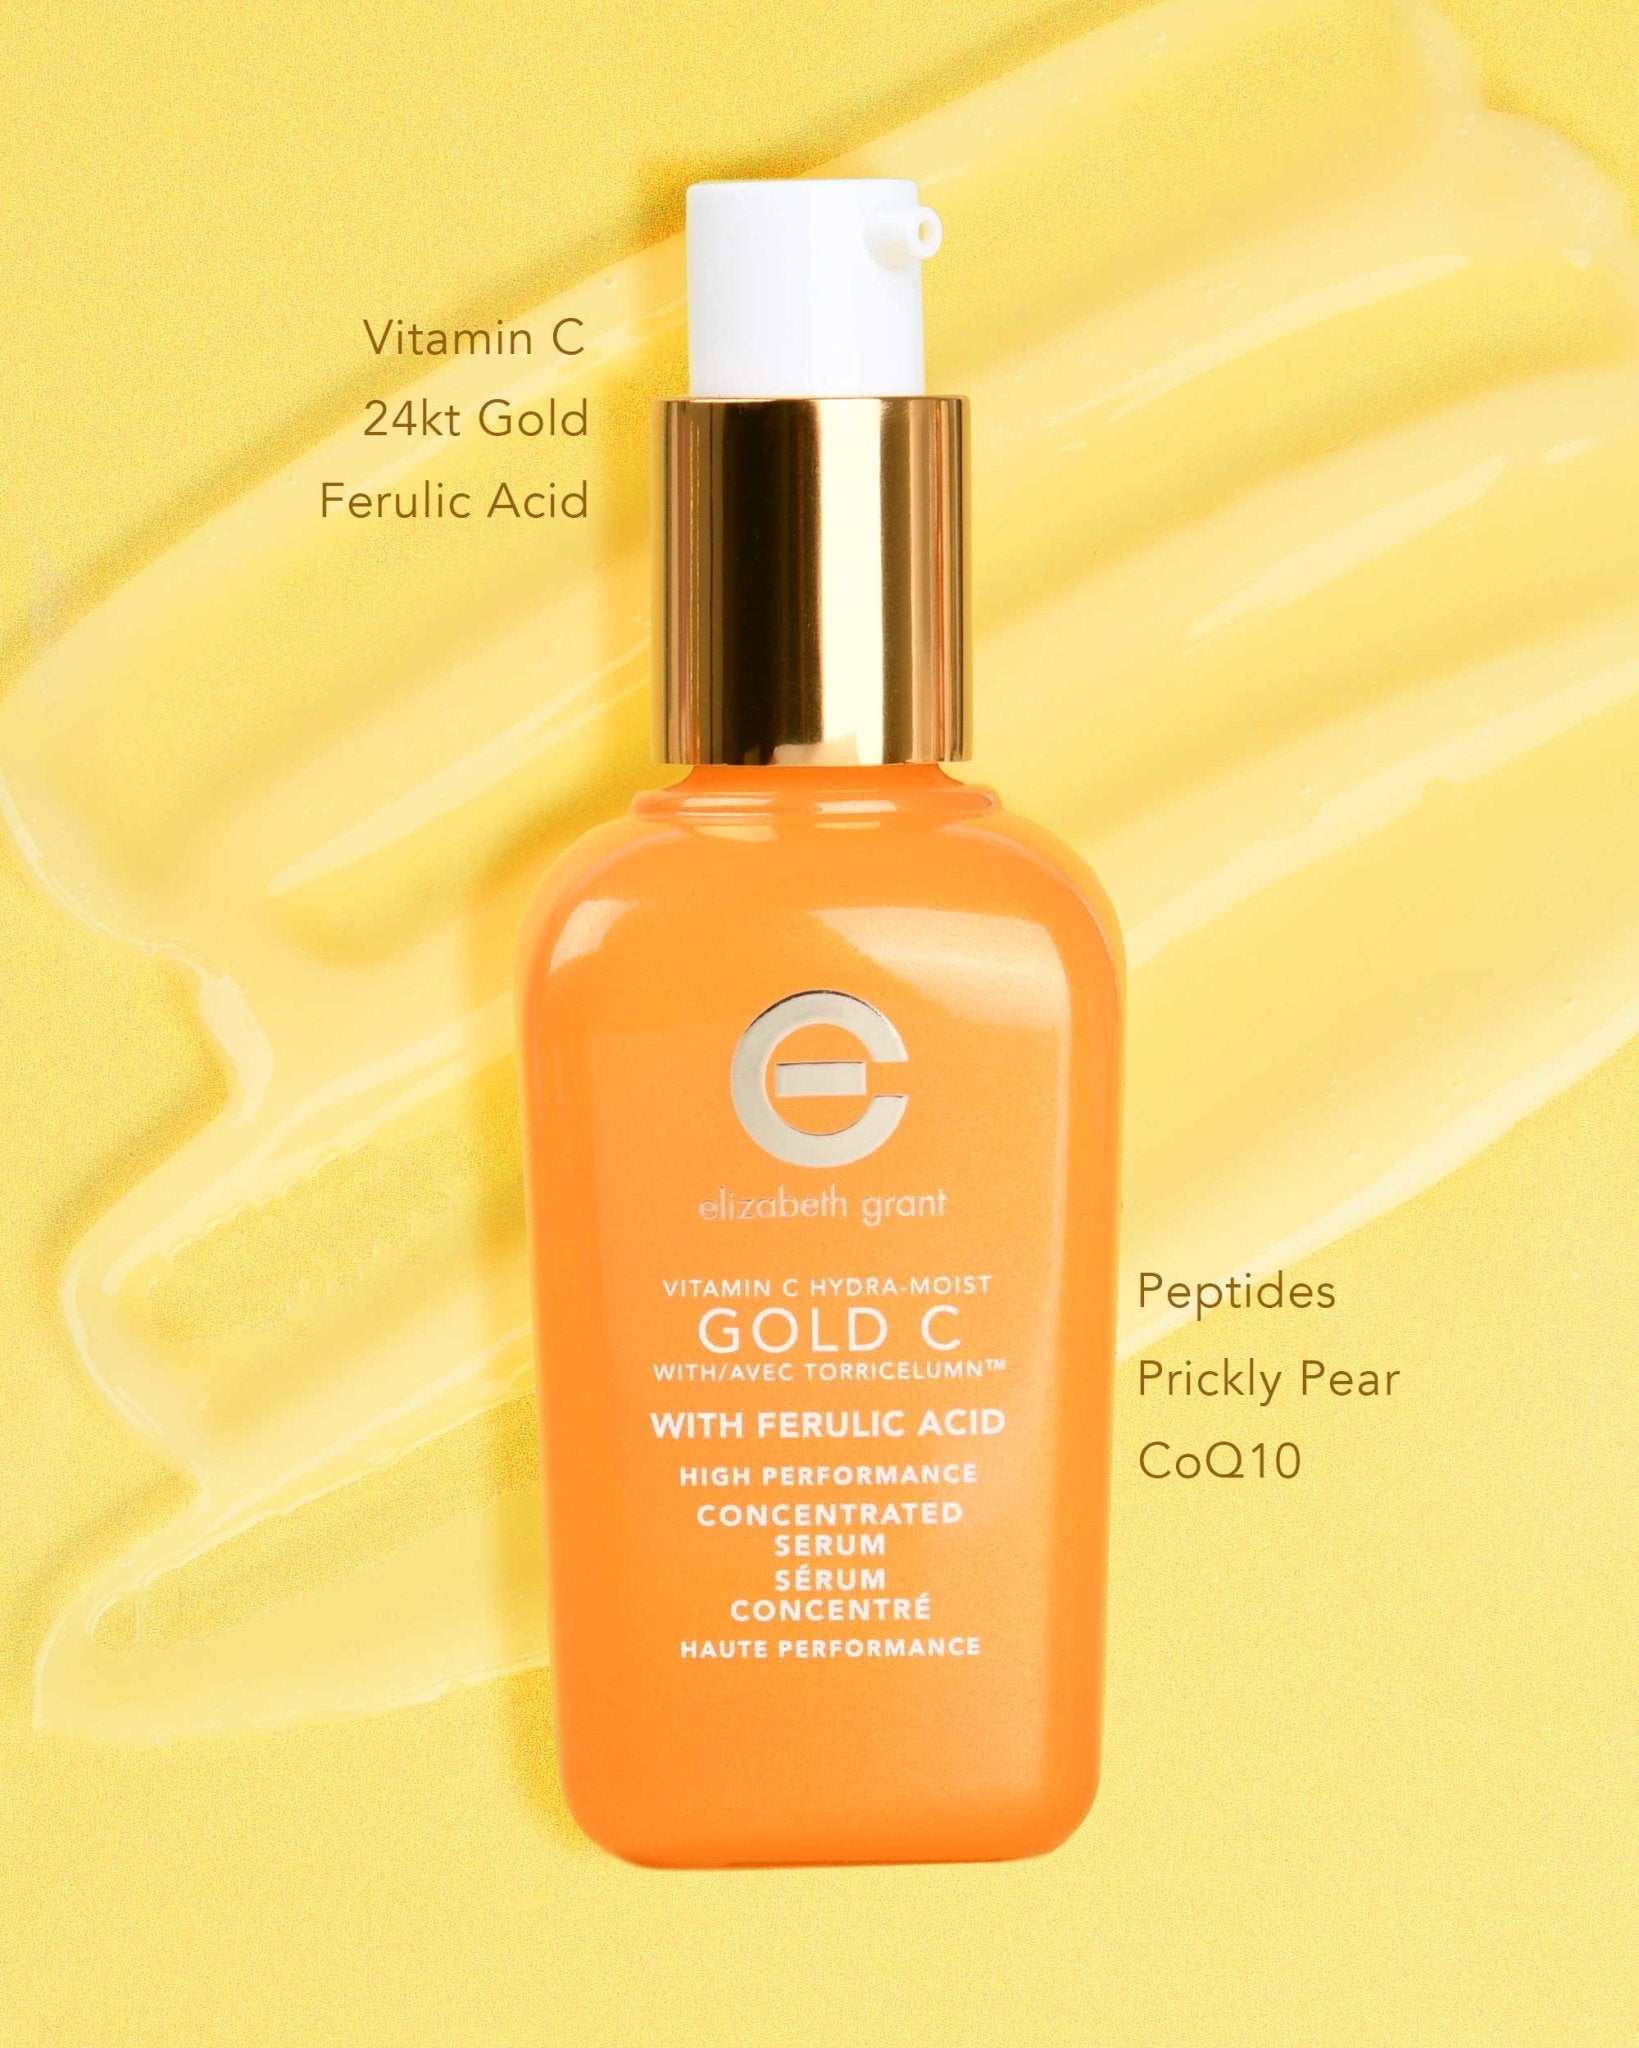 Vitamin C Hydra-Moist Gold C High Performance Concentrated Serum with Ferulic Acid - Elizabeth Grant Skin Care